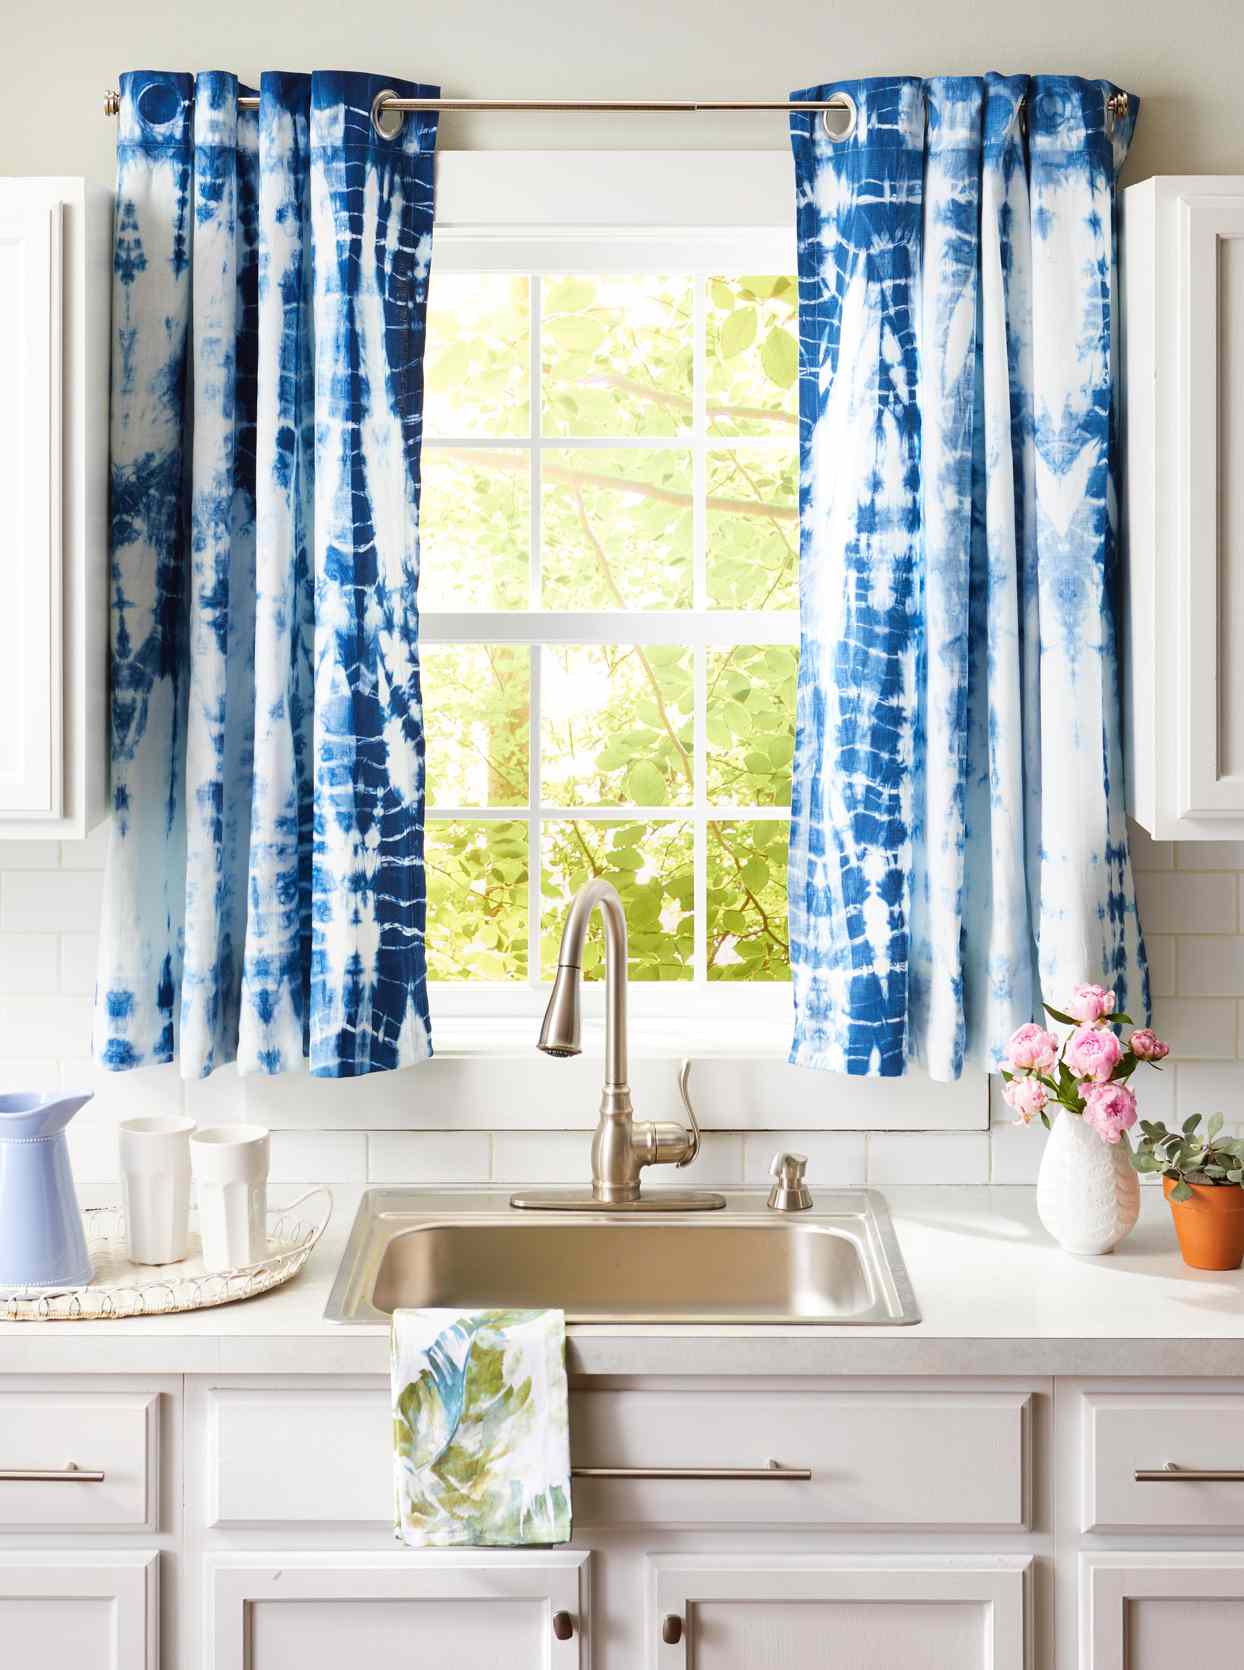 kitchen window shibori dye curtains